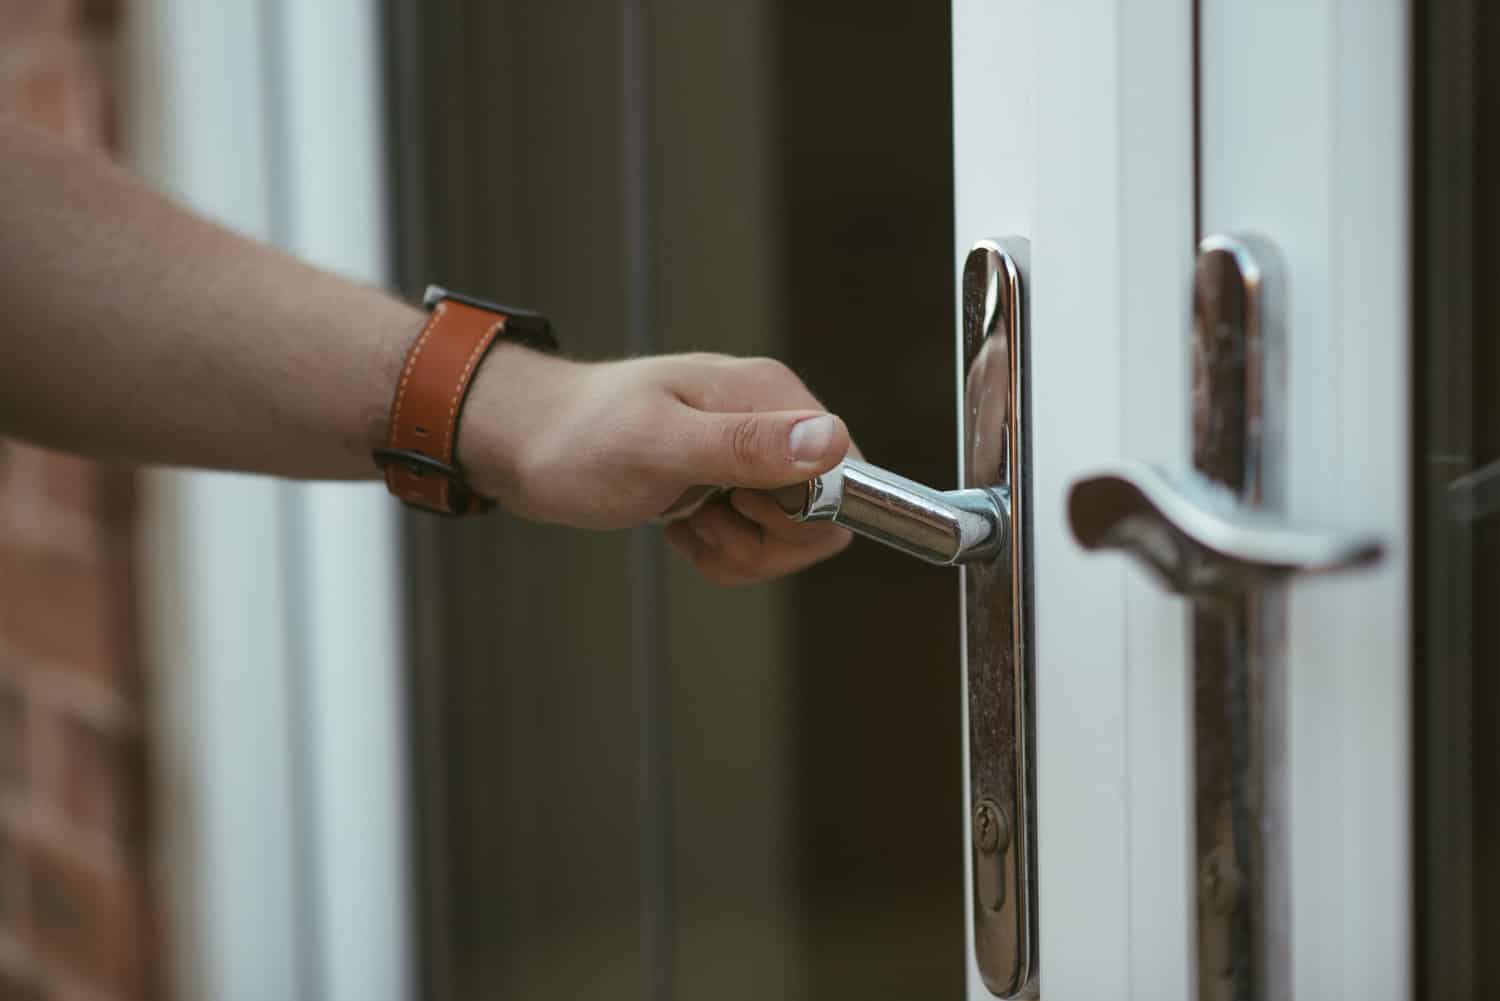 Image shows a hand on a door knob to open a storm door